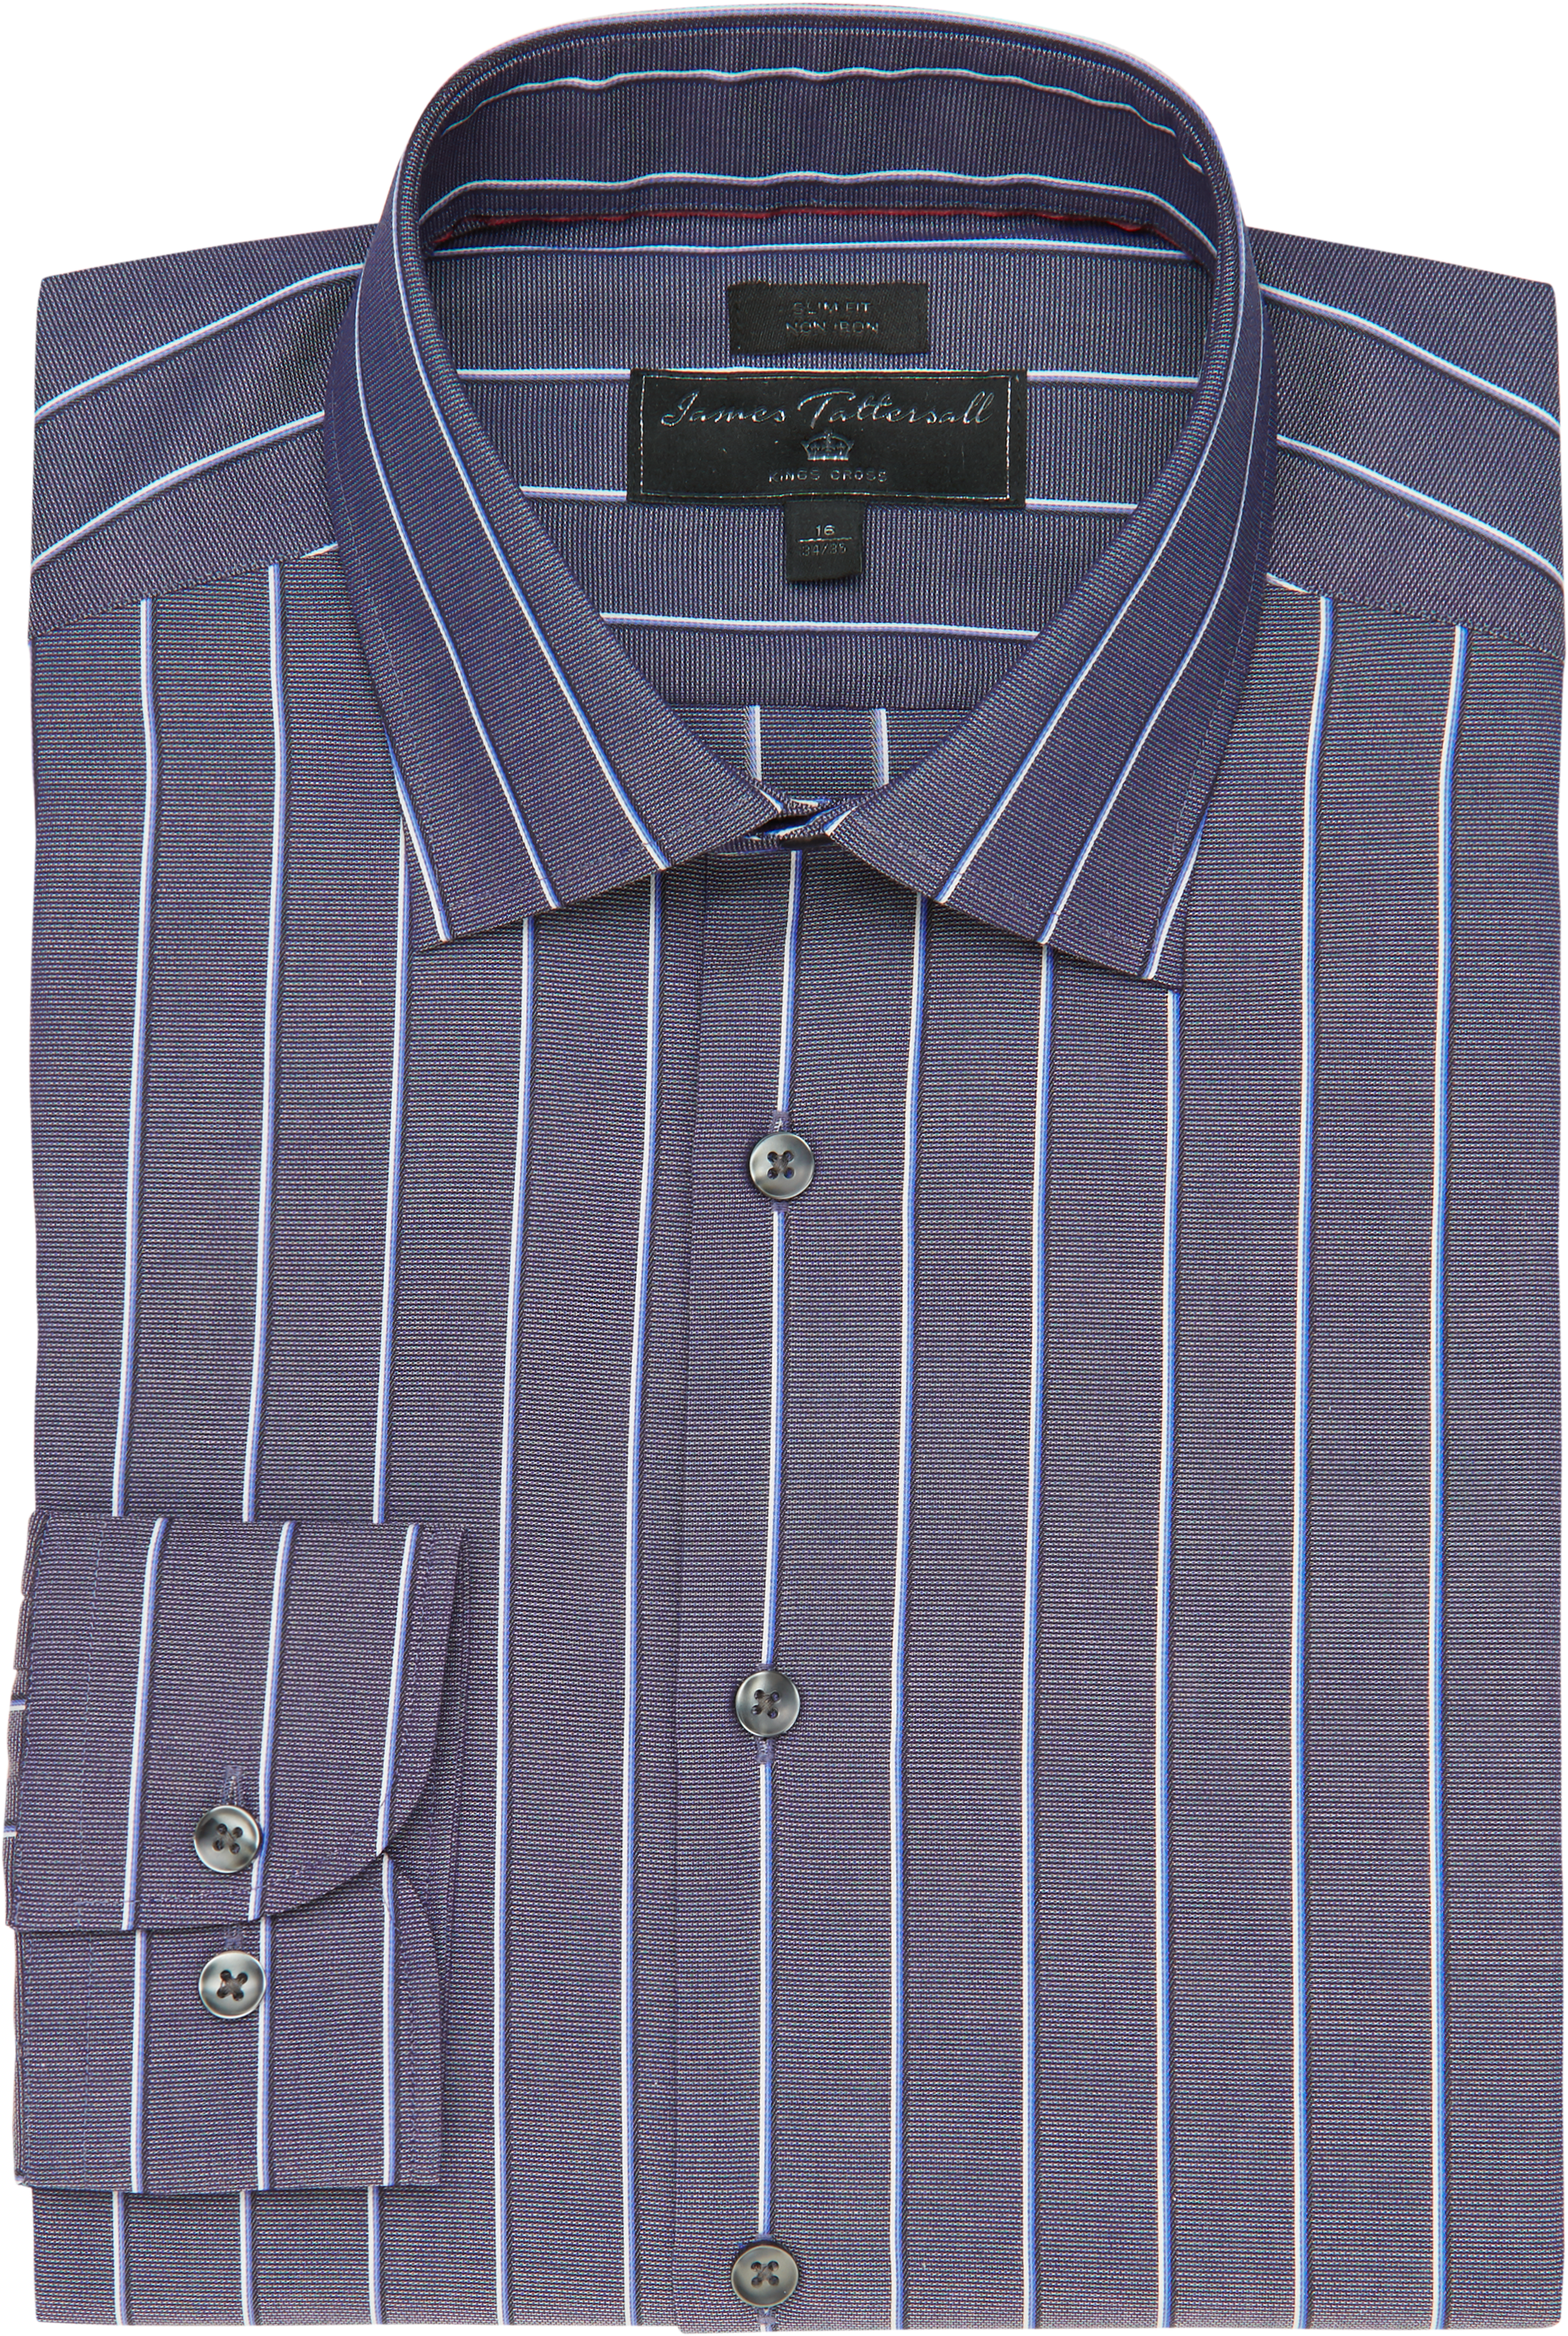 James Tattersall Kings Cross Gray & Blue Stripe Dress Shirt - Men's ...